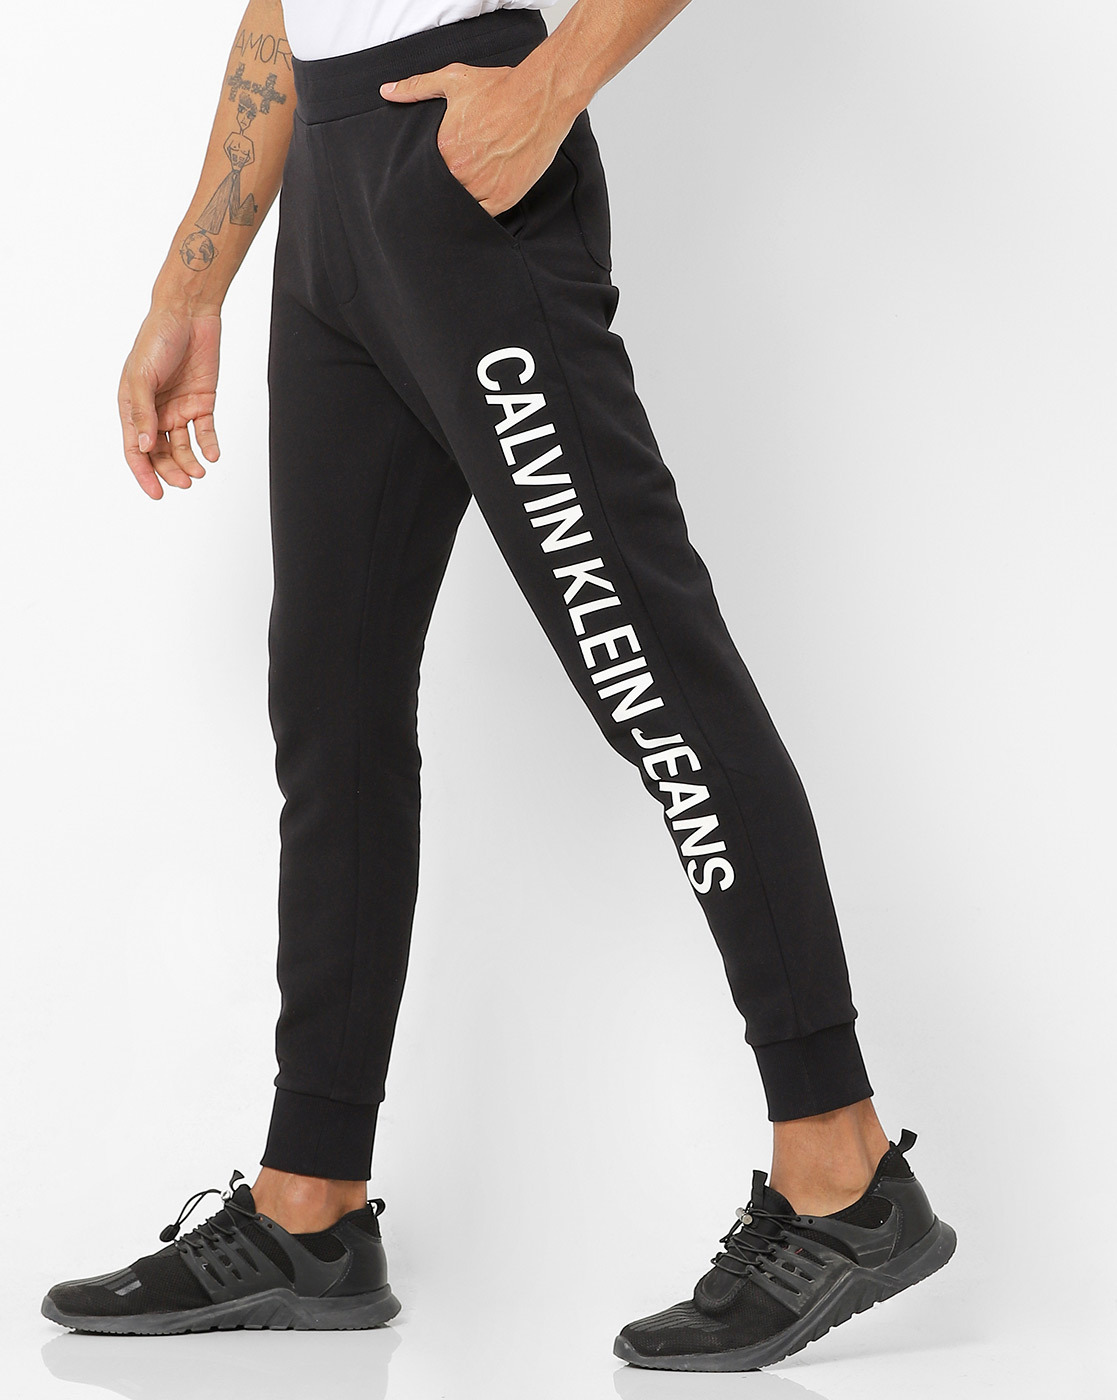 mythologie Rimpels Federaal Buy Black Track Pants for Men by Calvin Klein Jeans Online | Ajio.com